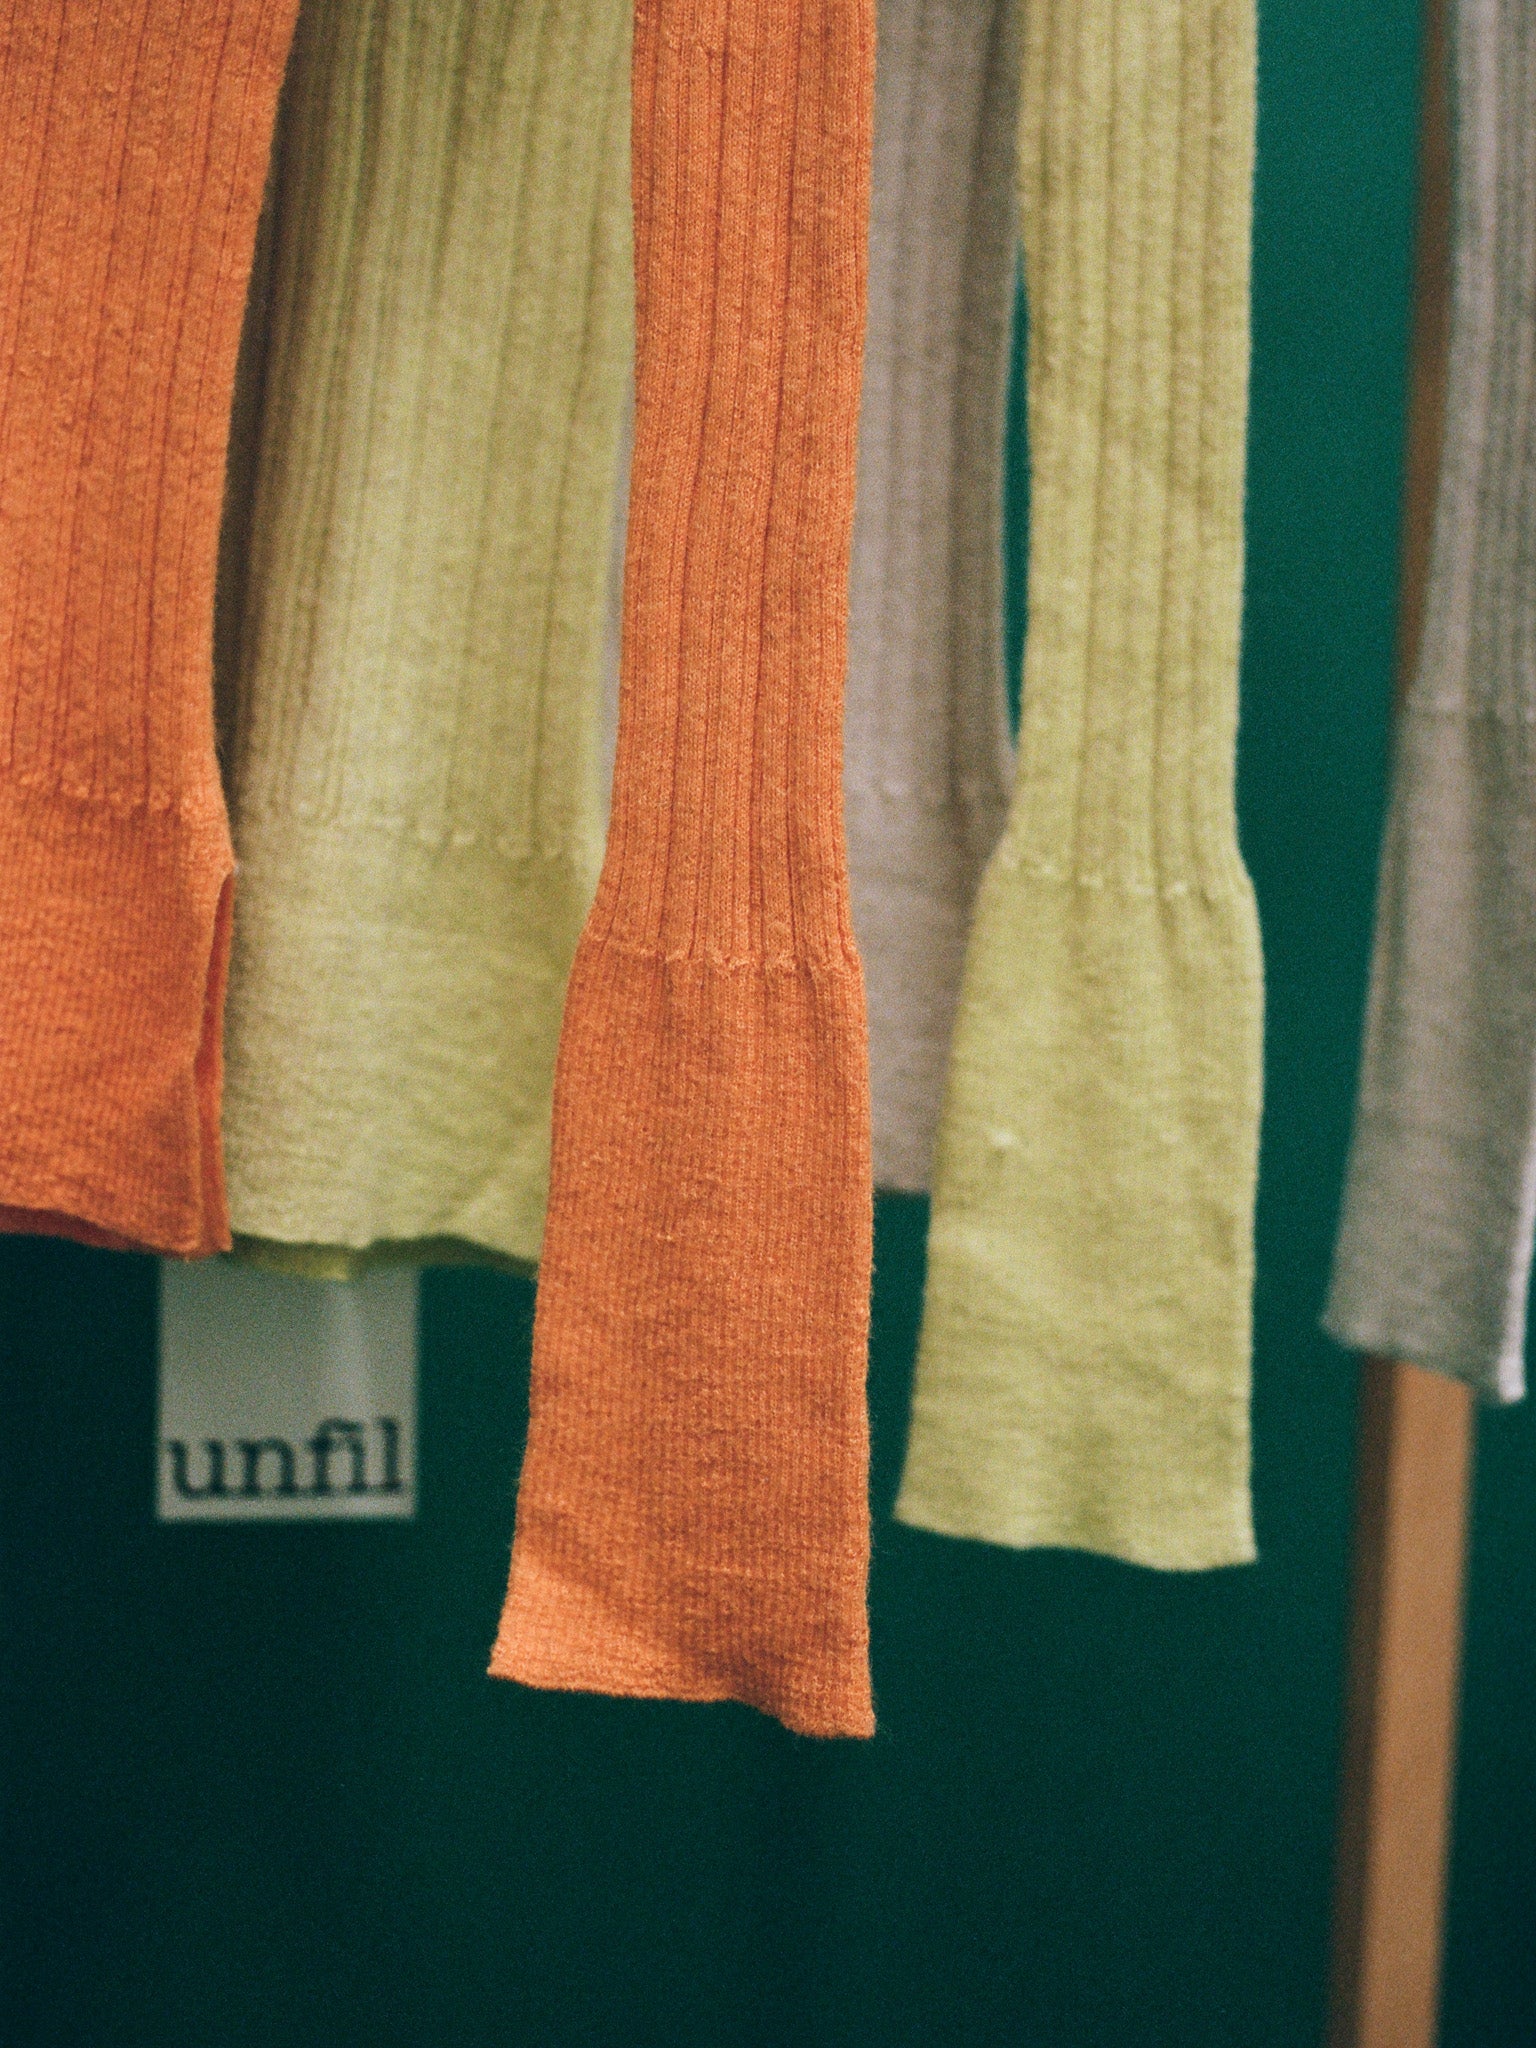 Namu Shop - Unfil Baby Suri Alpaca High Neck Sweater - Light Orange